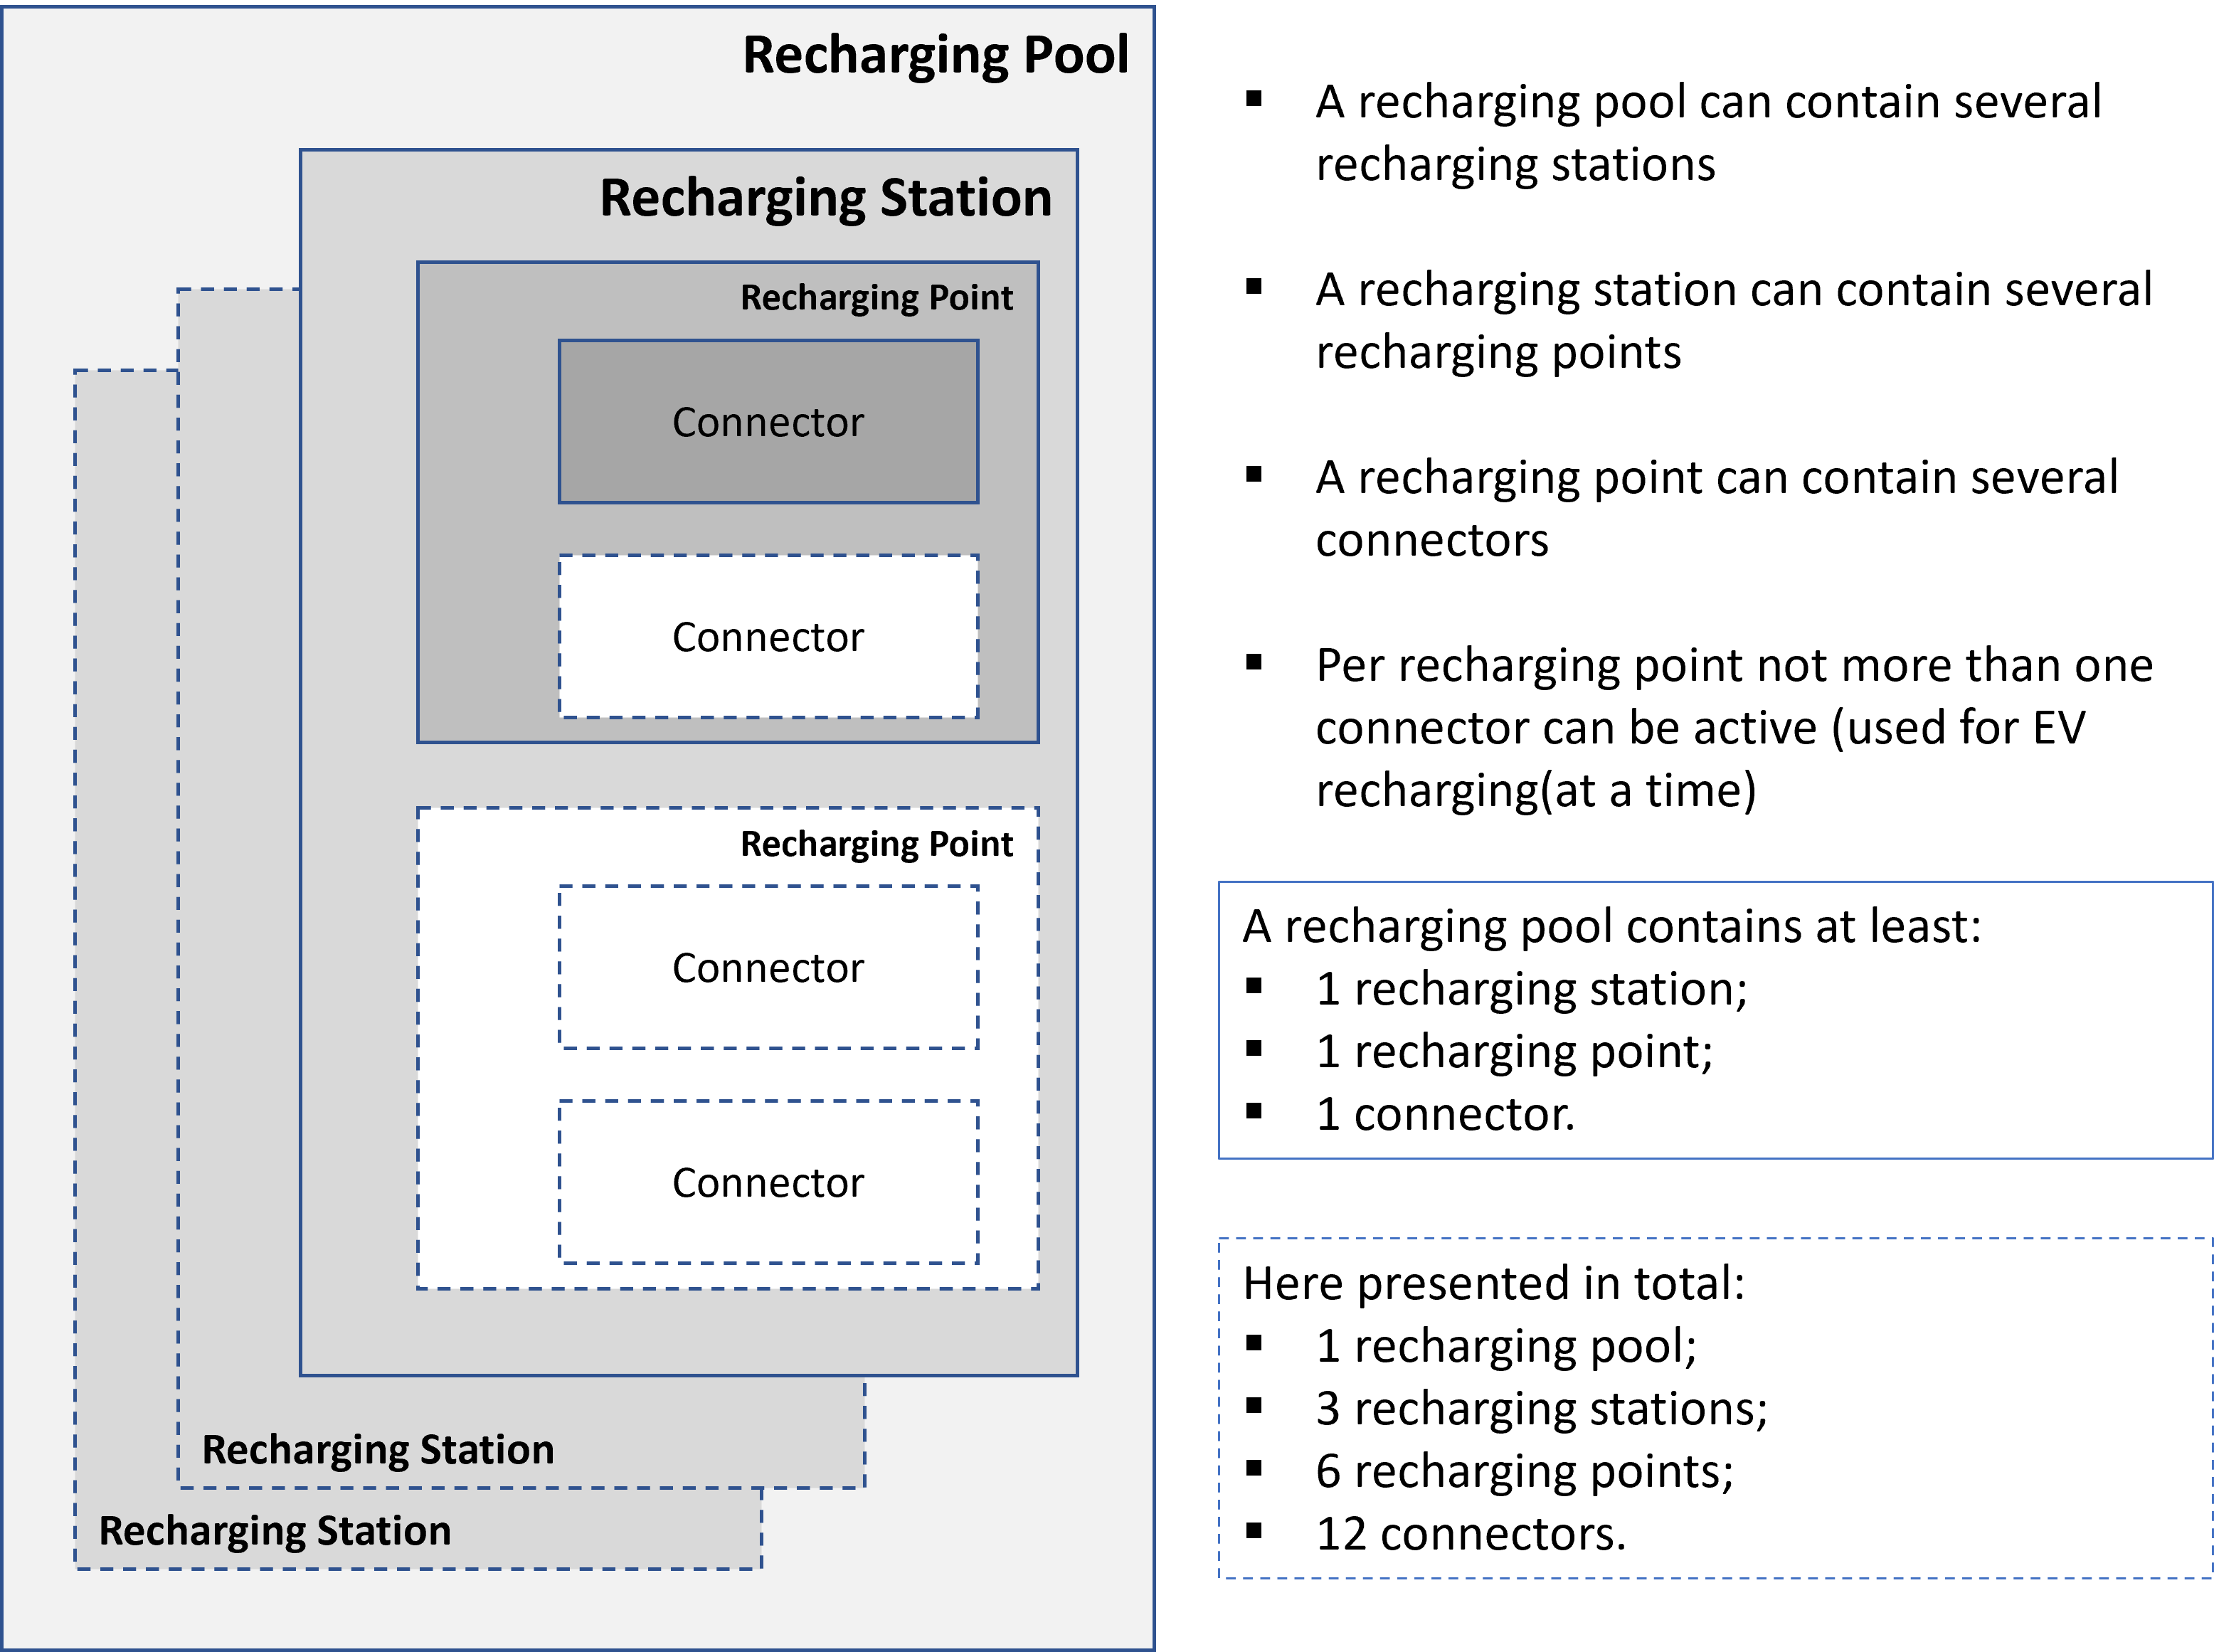 Recharging pool taxonomy